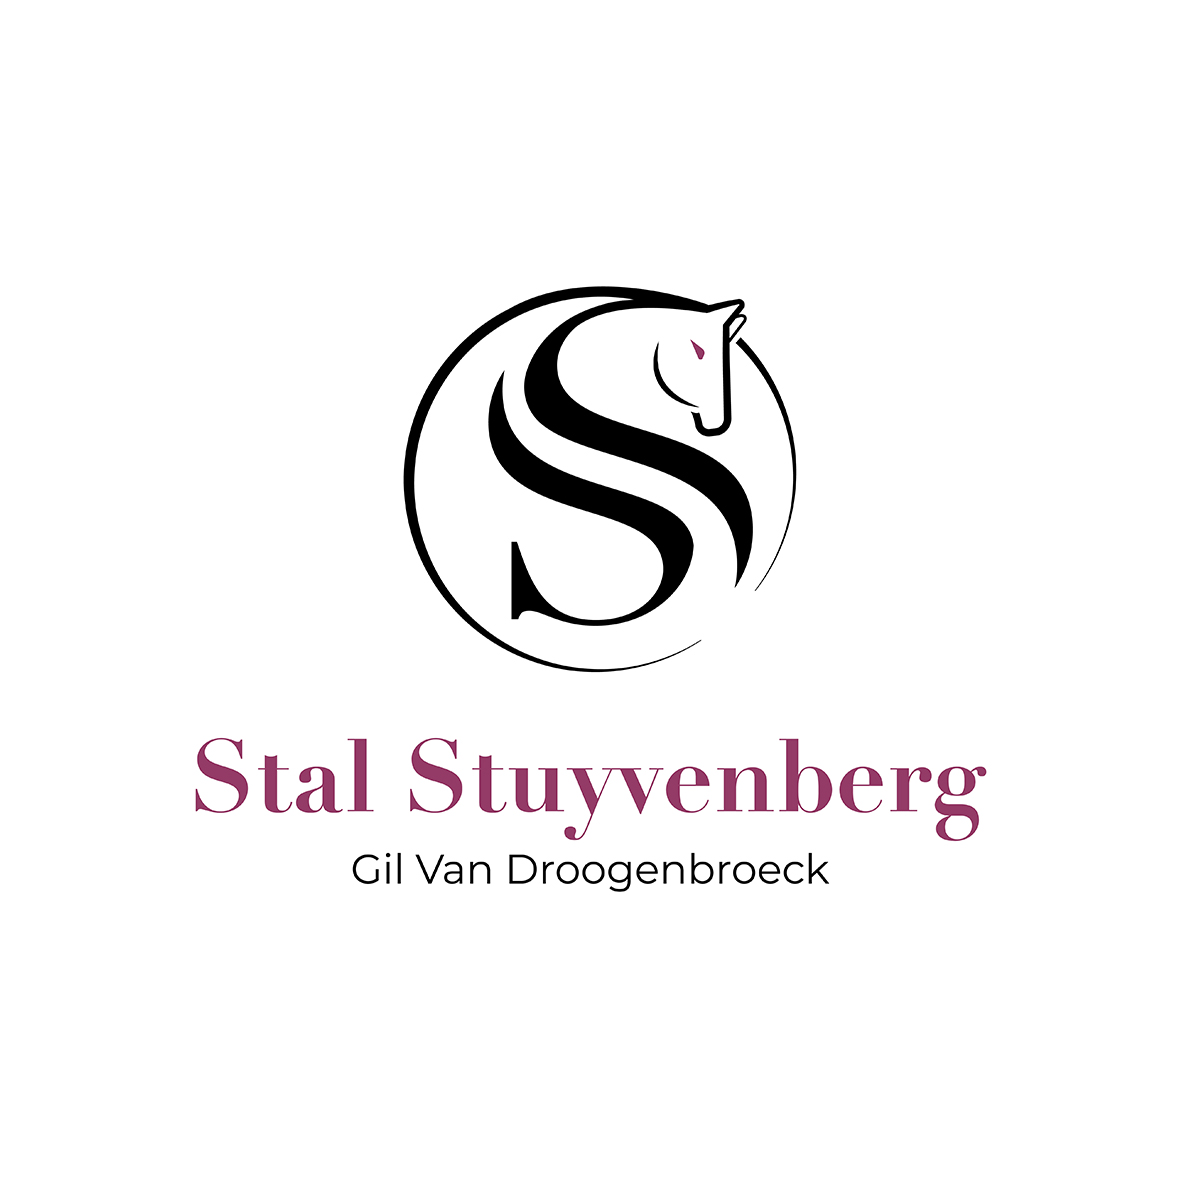 Stal Stuyvenberg (wit achtergrond) voor website